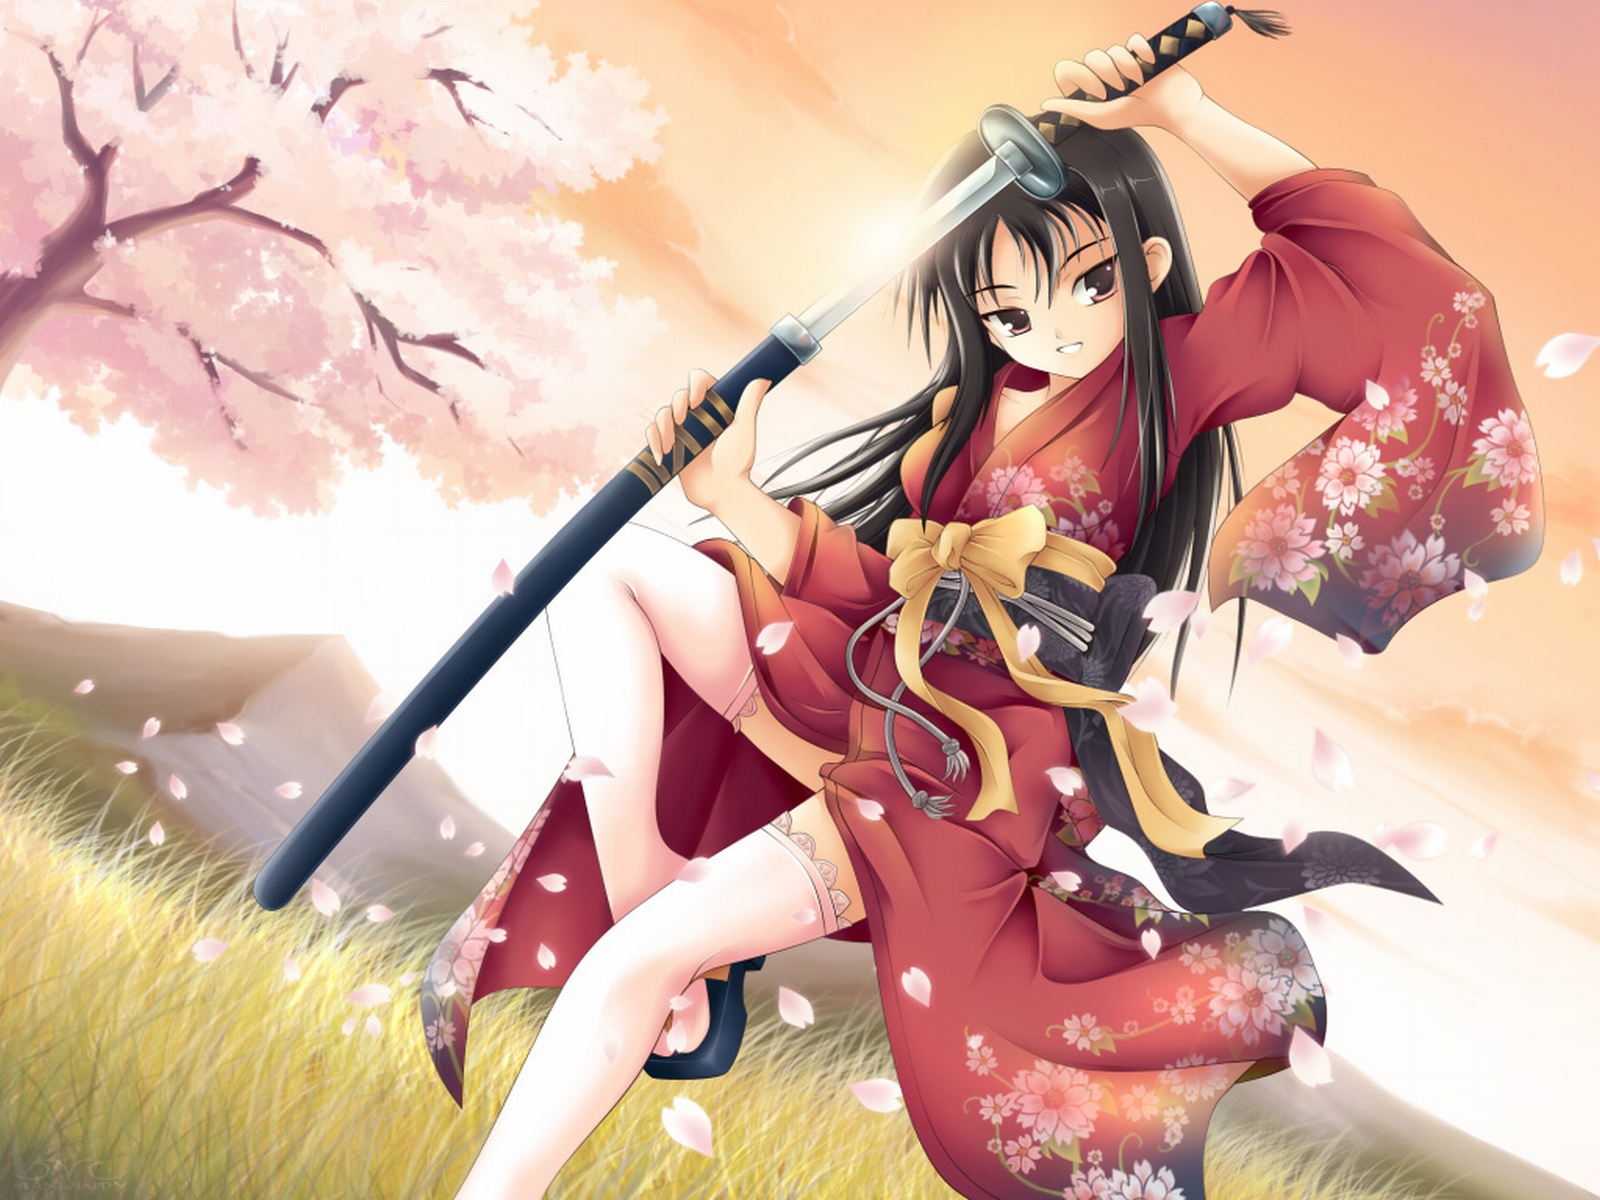 1078619 descargar imagen animado, mujeres, ¡kon!, samurái, espada, guerrero: fondos de pantalla y protectores de pantalla gratis